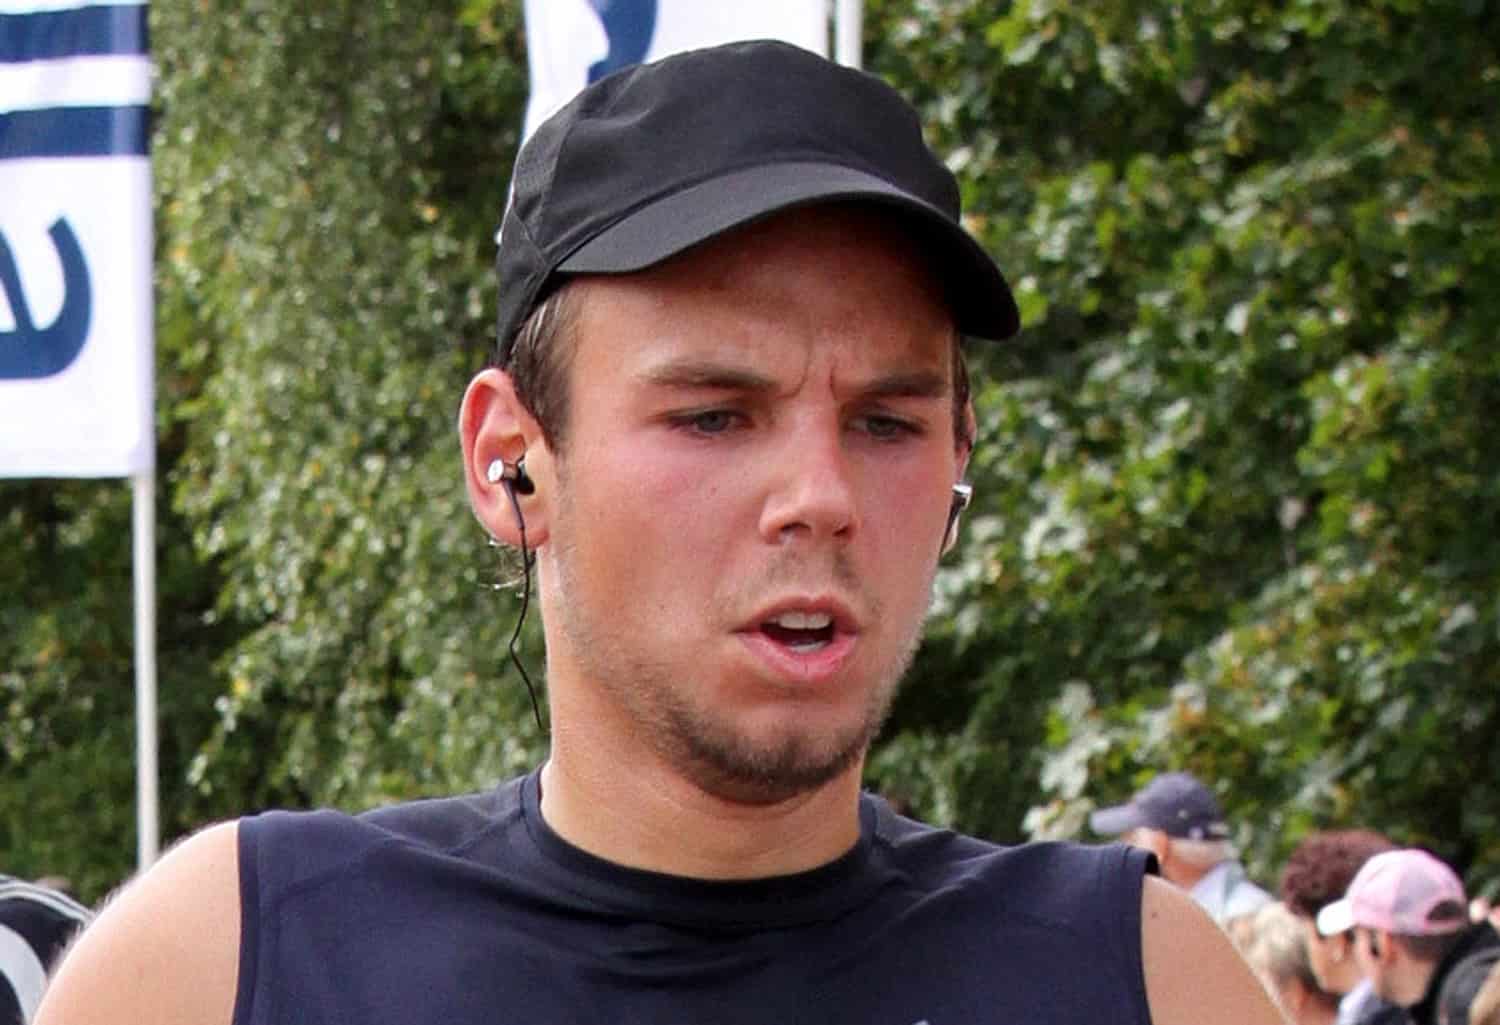 Andreas Lubitz, takes part in the Airport Hamburg 10-mile run on Sept. 13, 2009 in Hamburg.